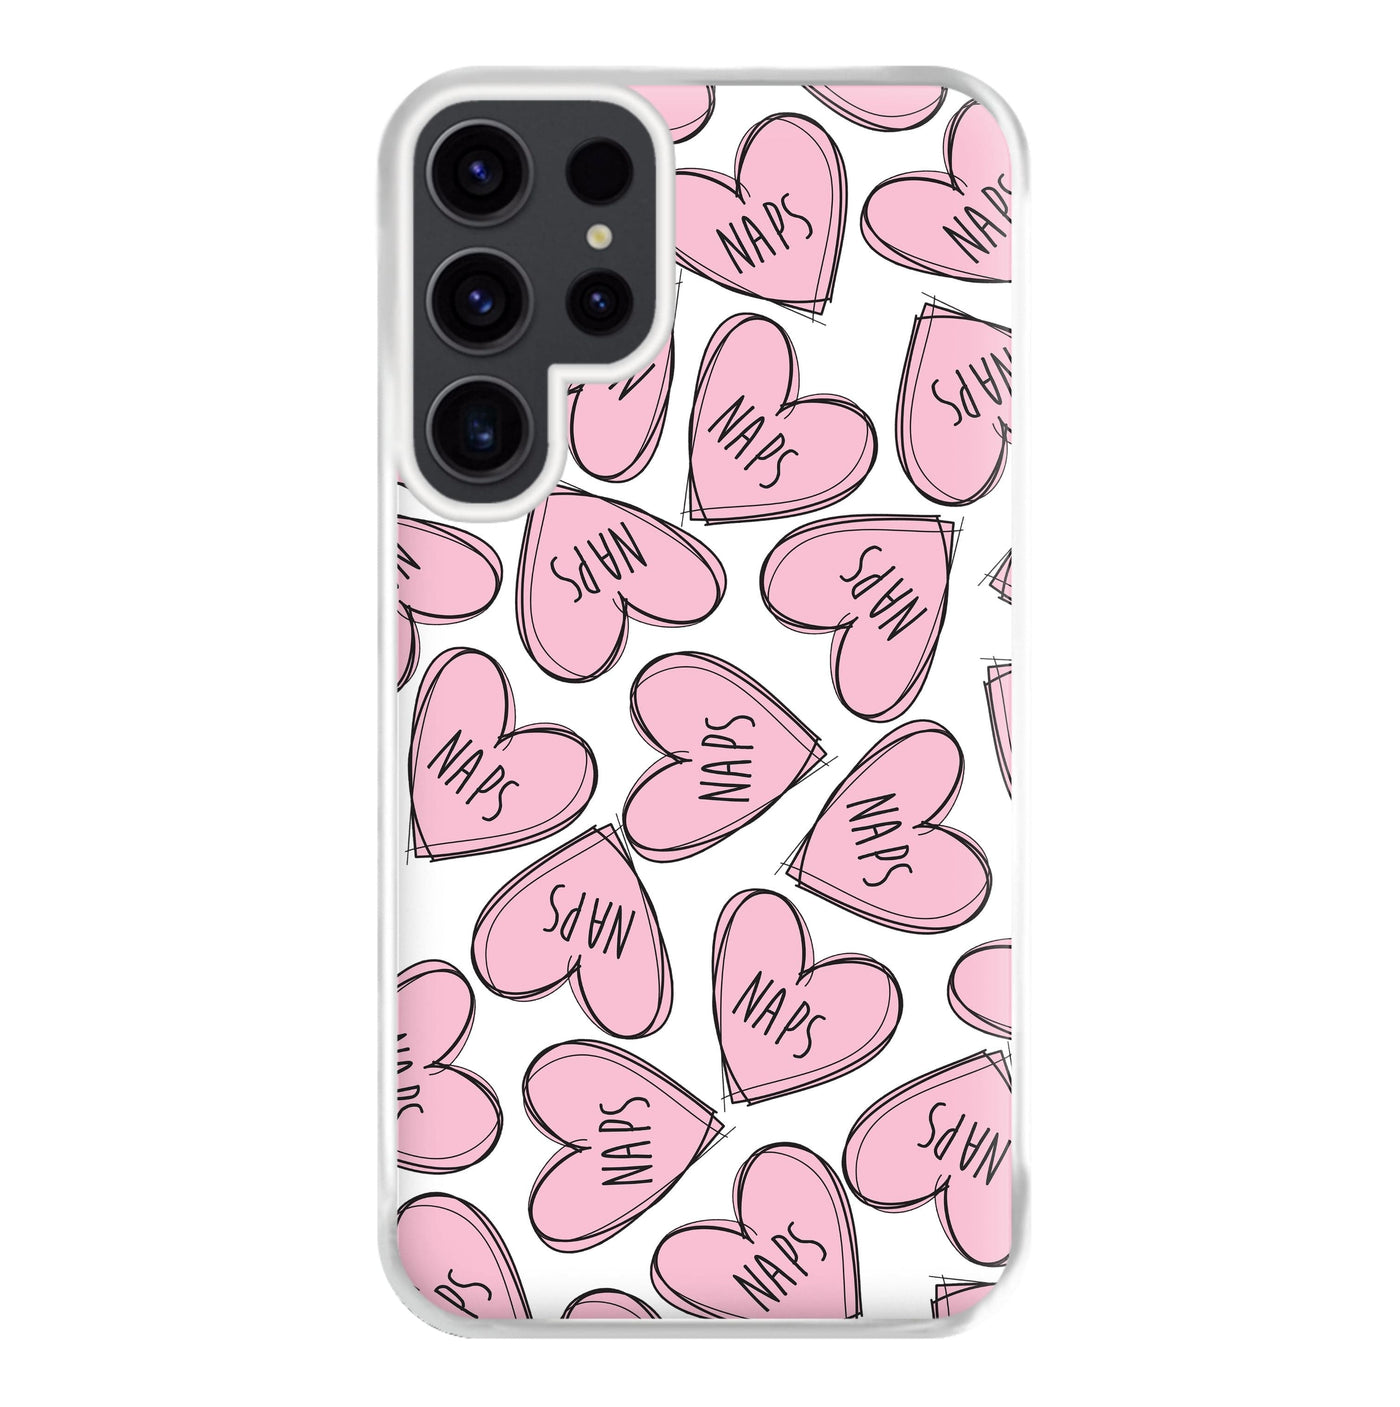 Nap Hearts, Tumblr Inspired Phone Case